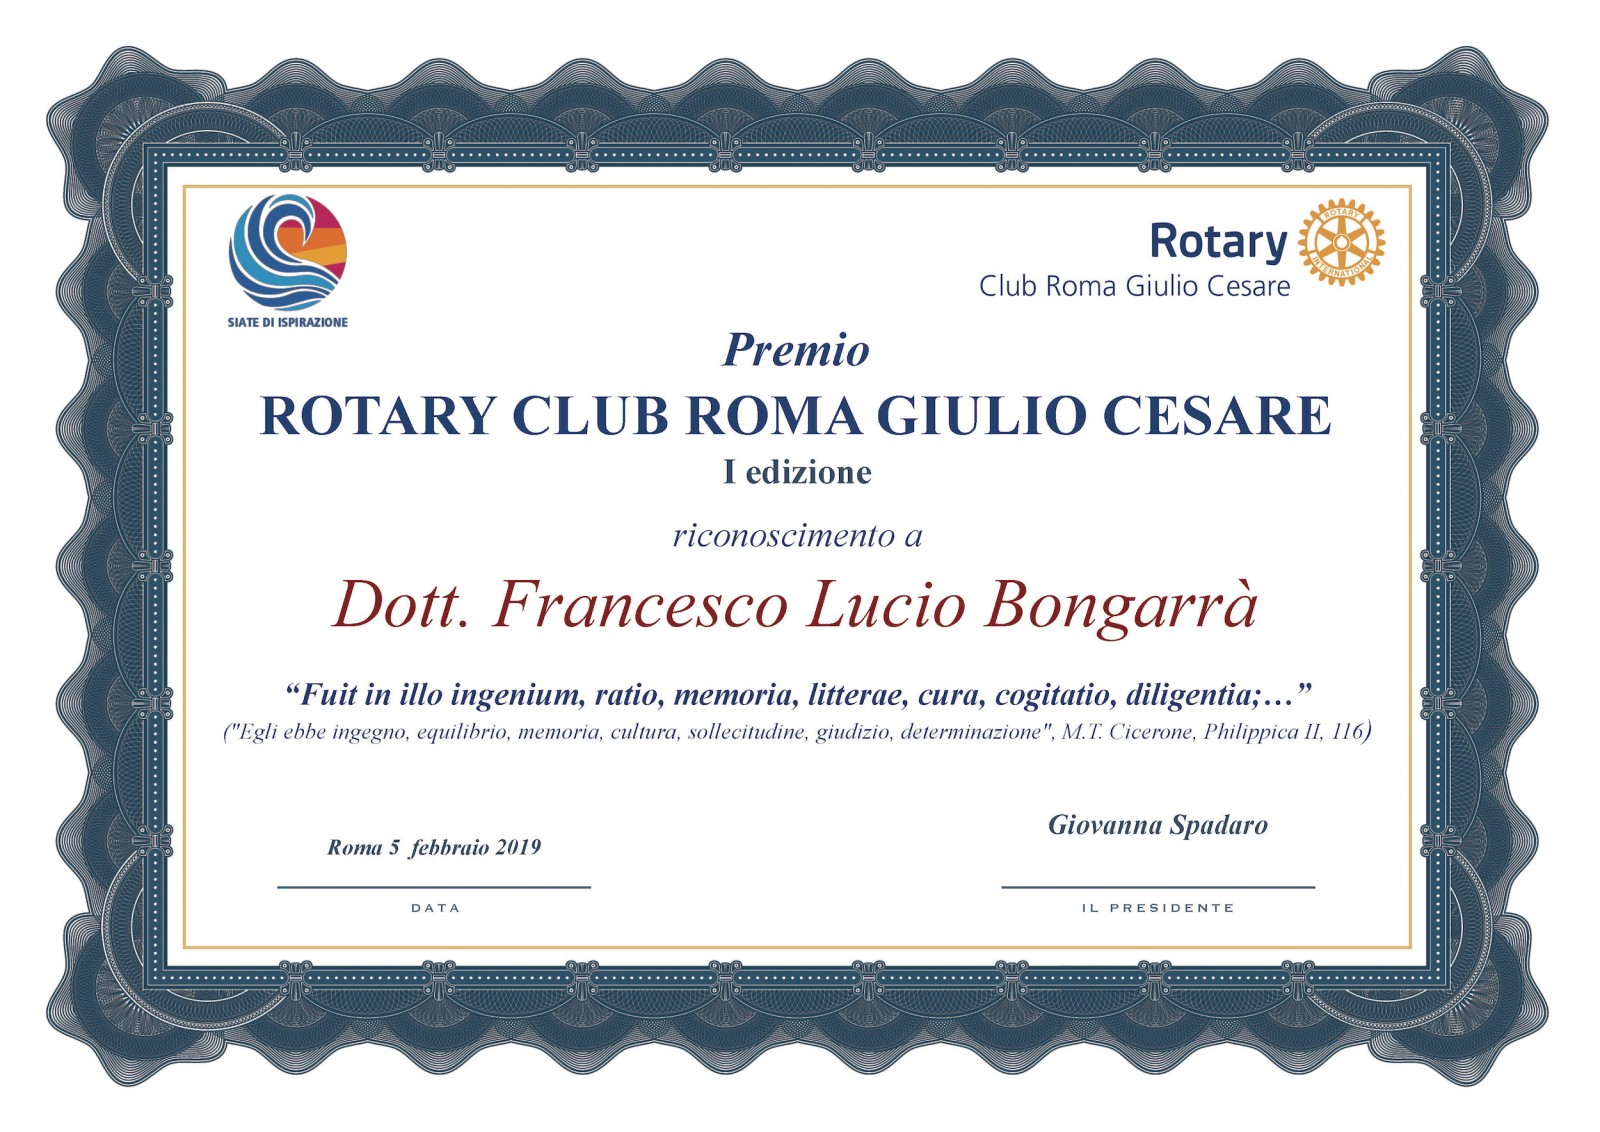 Gallery - Premio "ROTARY CLUB ROMA GIULIO CESARE"